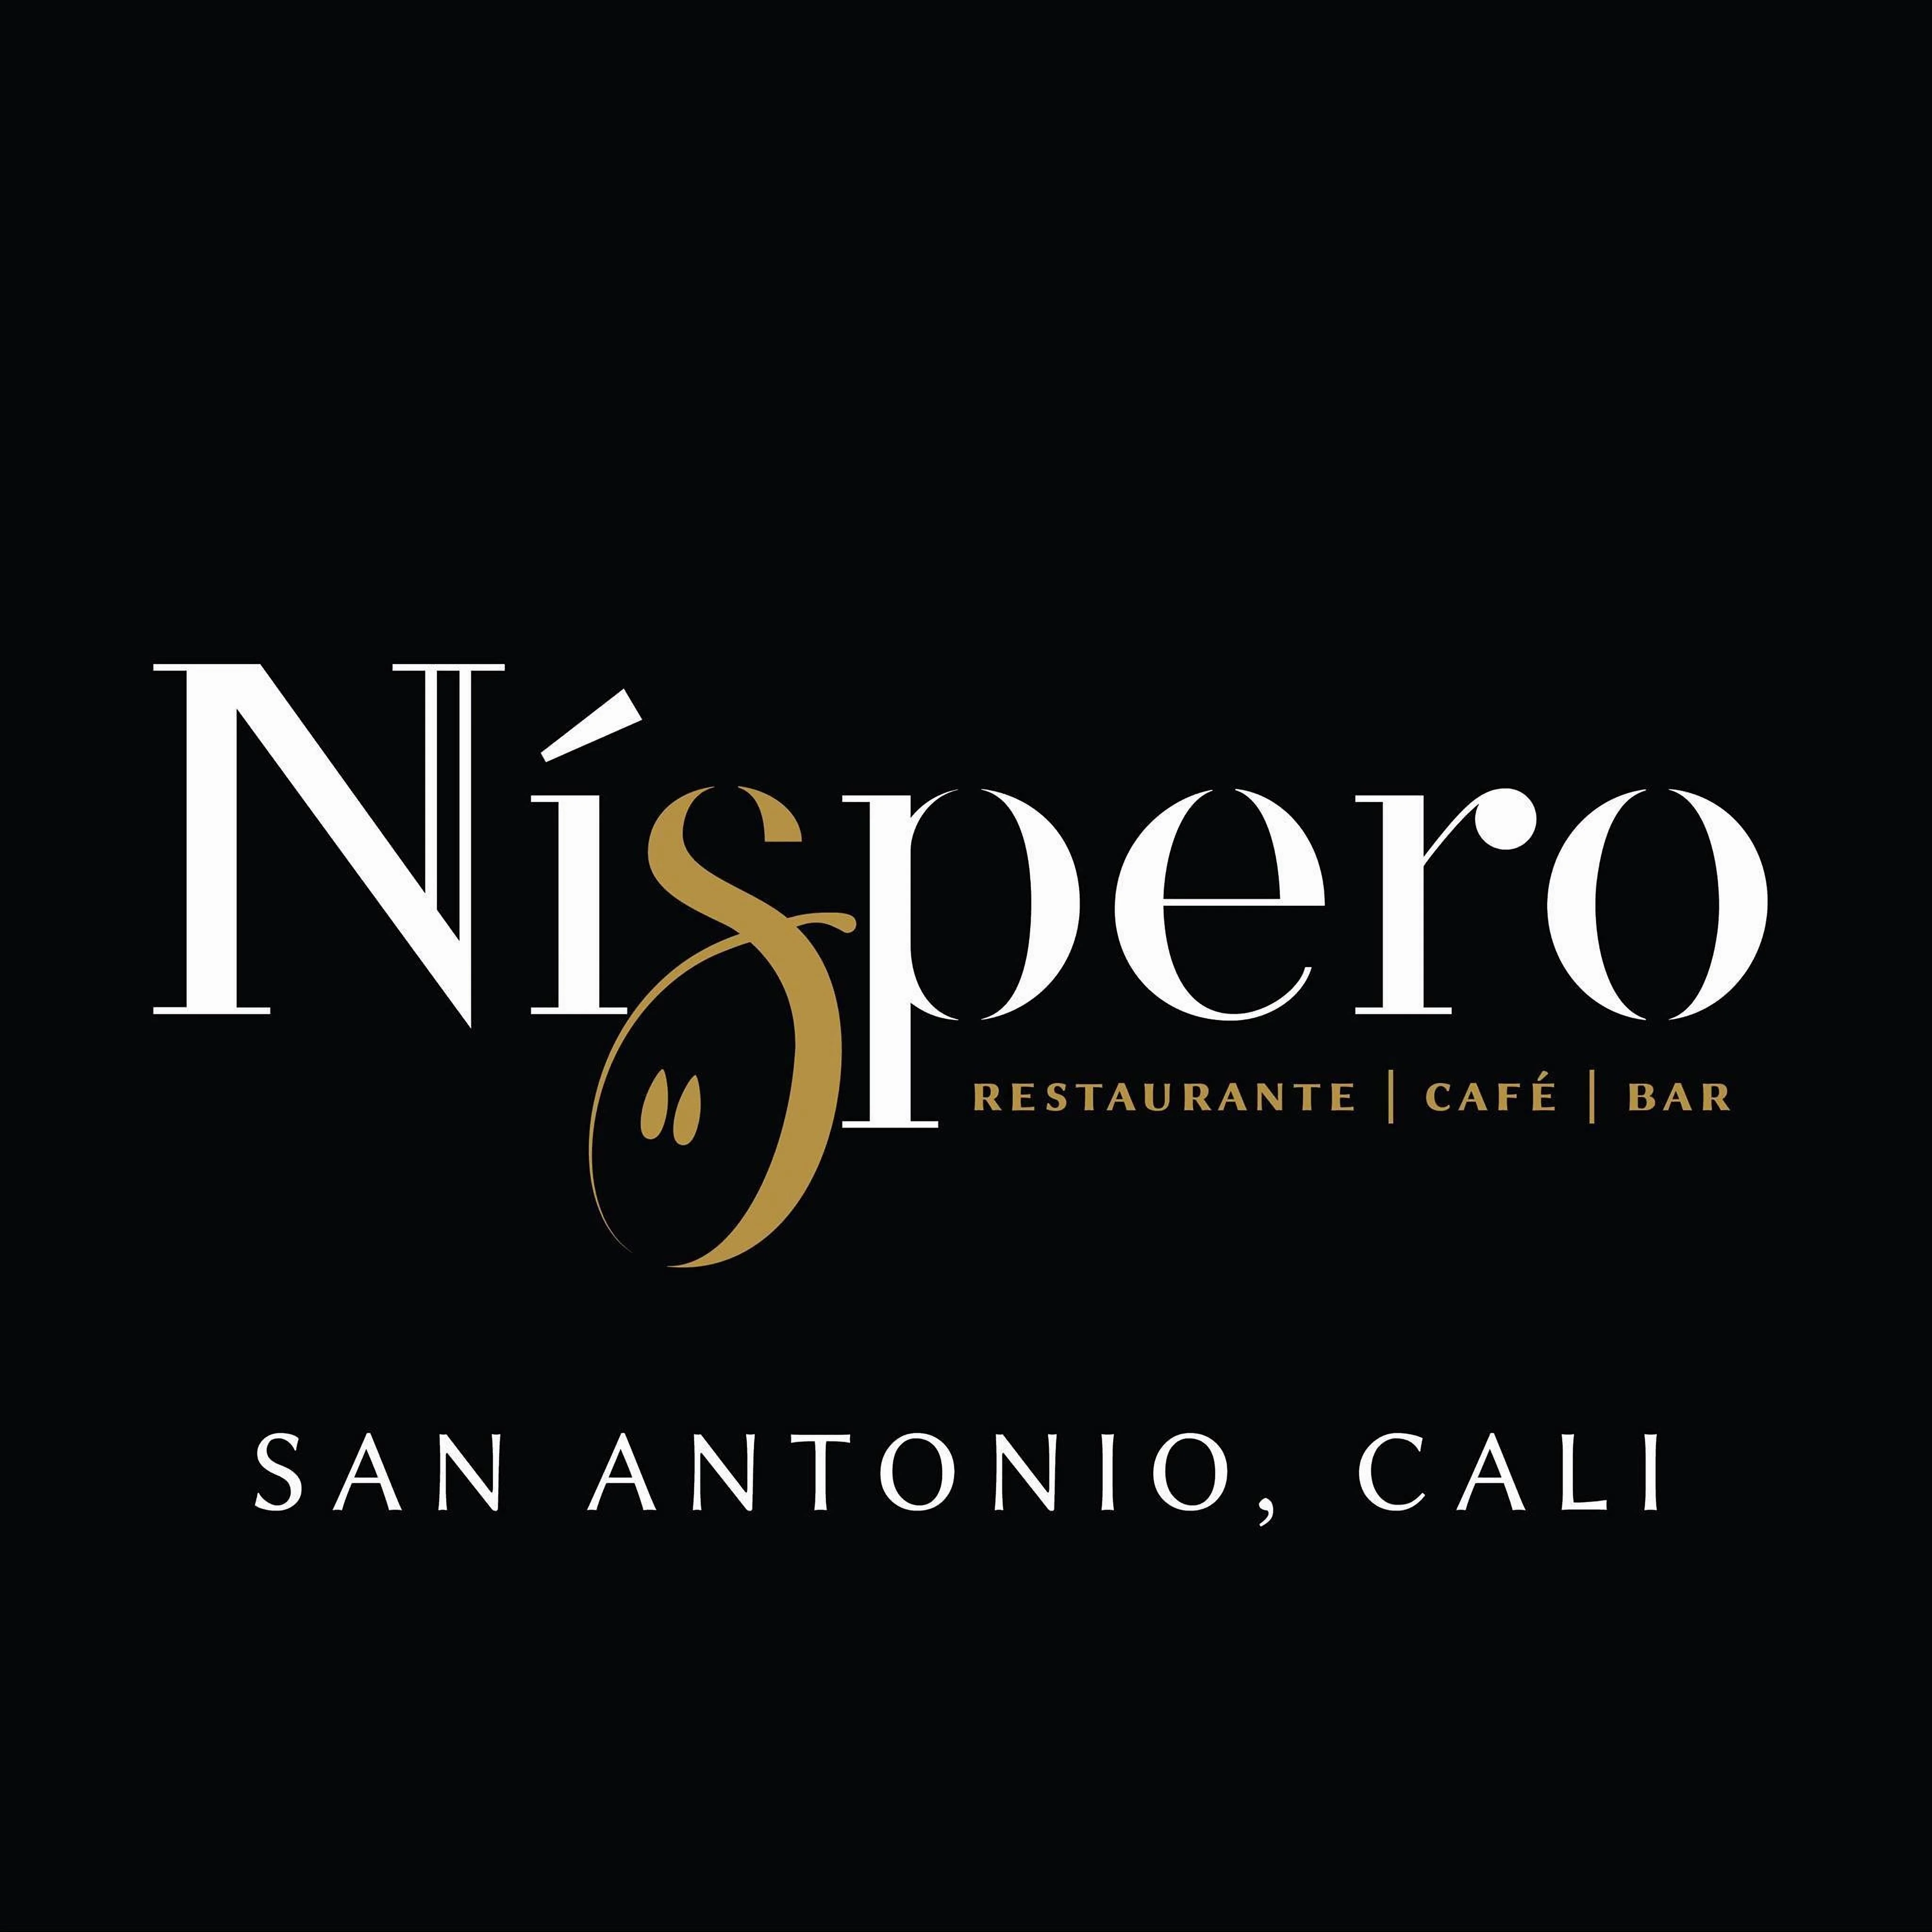 Níspero Restaurante, San Antonio, Cali-7447